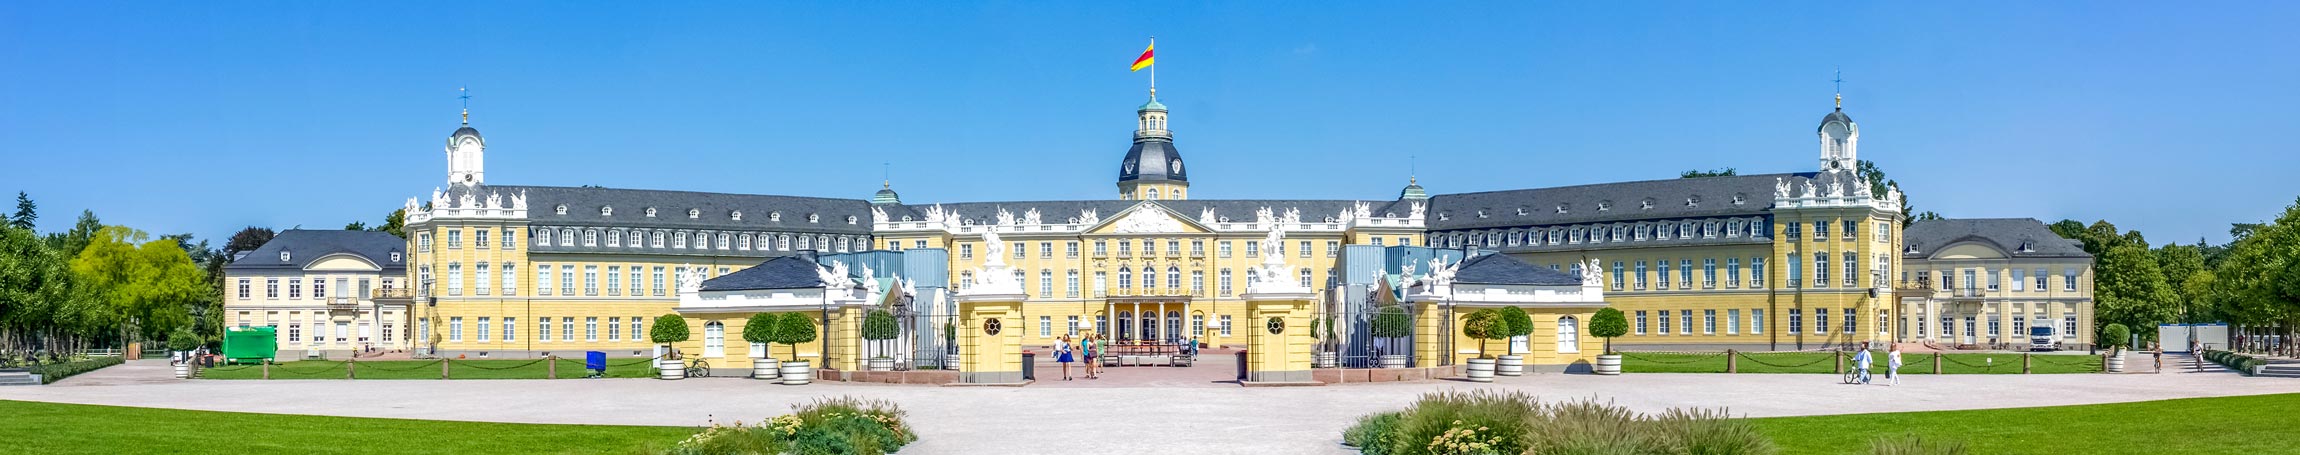 Karlsruher Schloss in Panoramaansicht